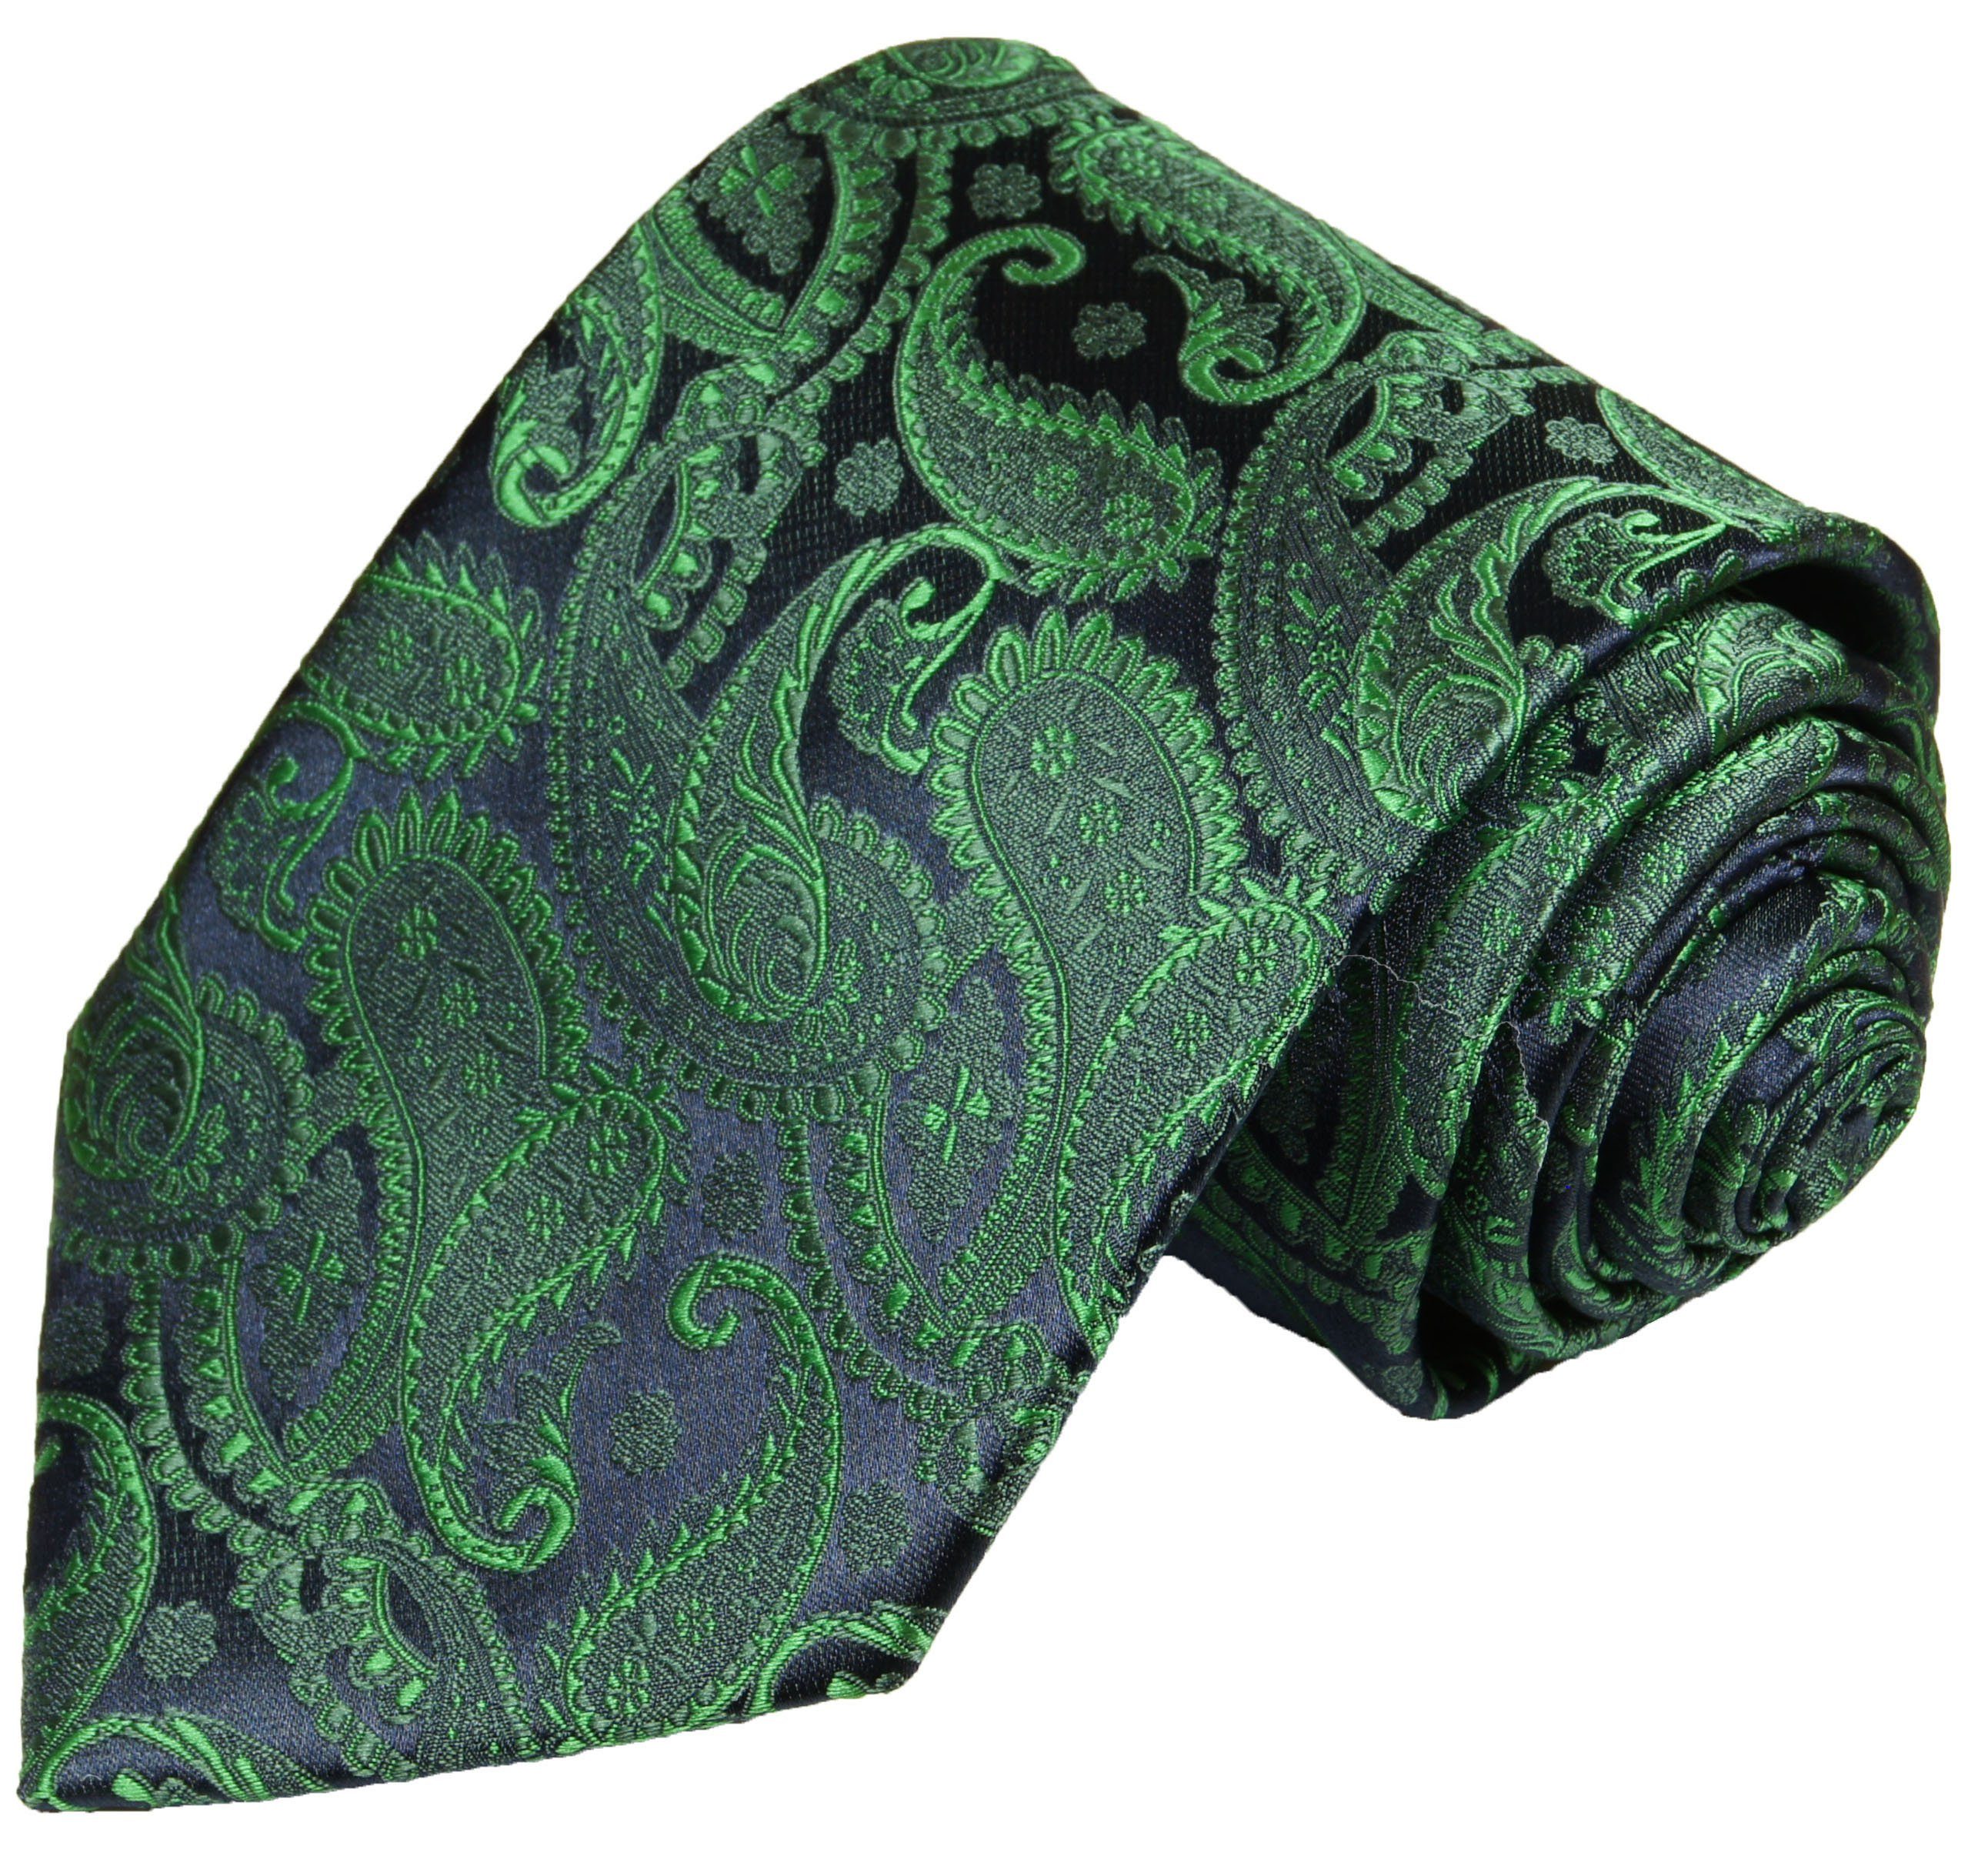 Paul Malone Krawatte Herren Mikrofaser grün Schmal Bräutigam paisley - (6cm), V14 - Hochzeitskrawatte